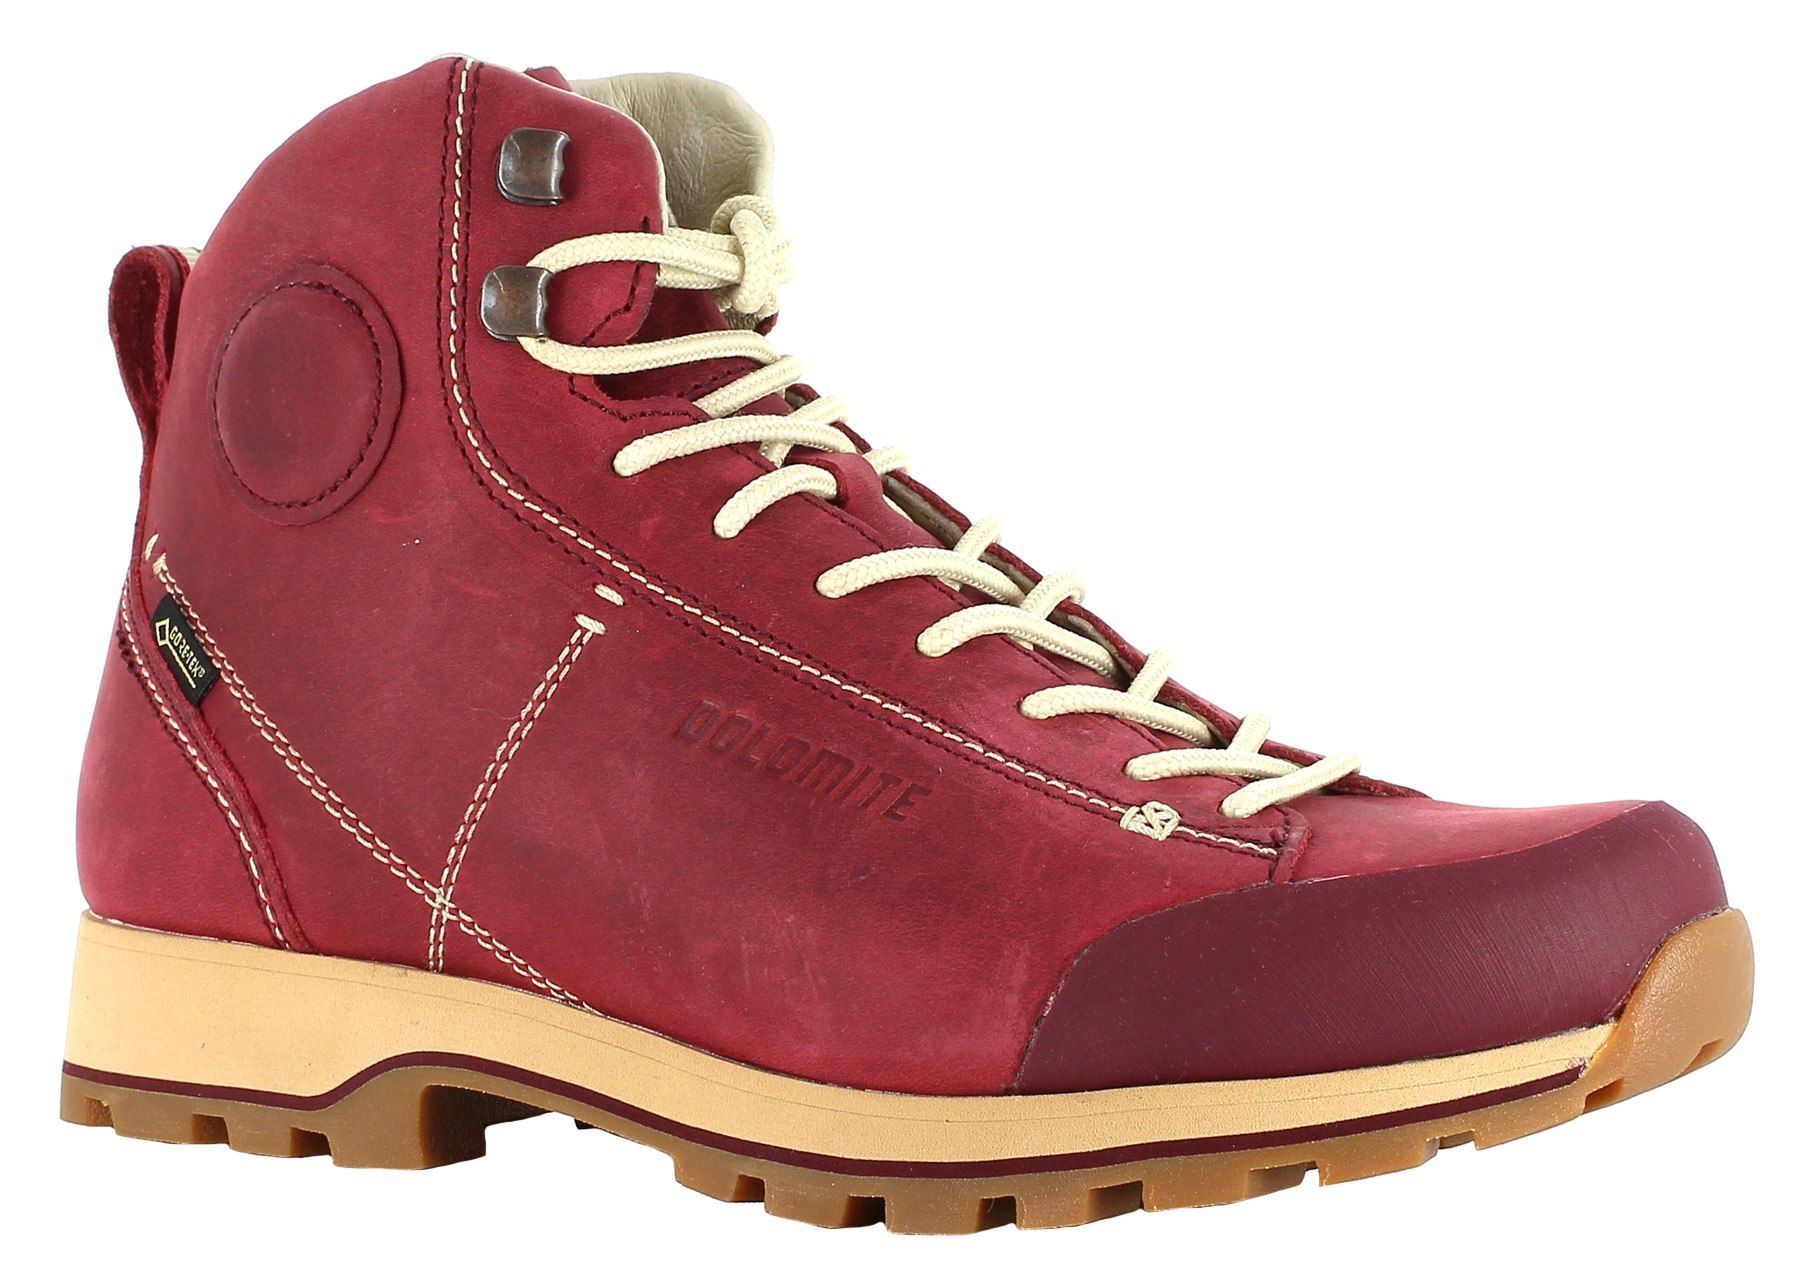 Ботинки Dolomite Cinquantaquattro High FG GTX, burgundy red, 5 UK